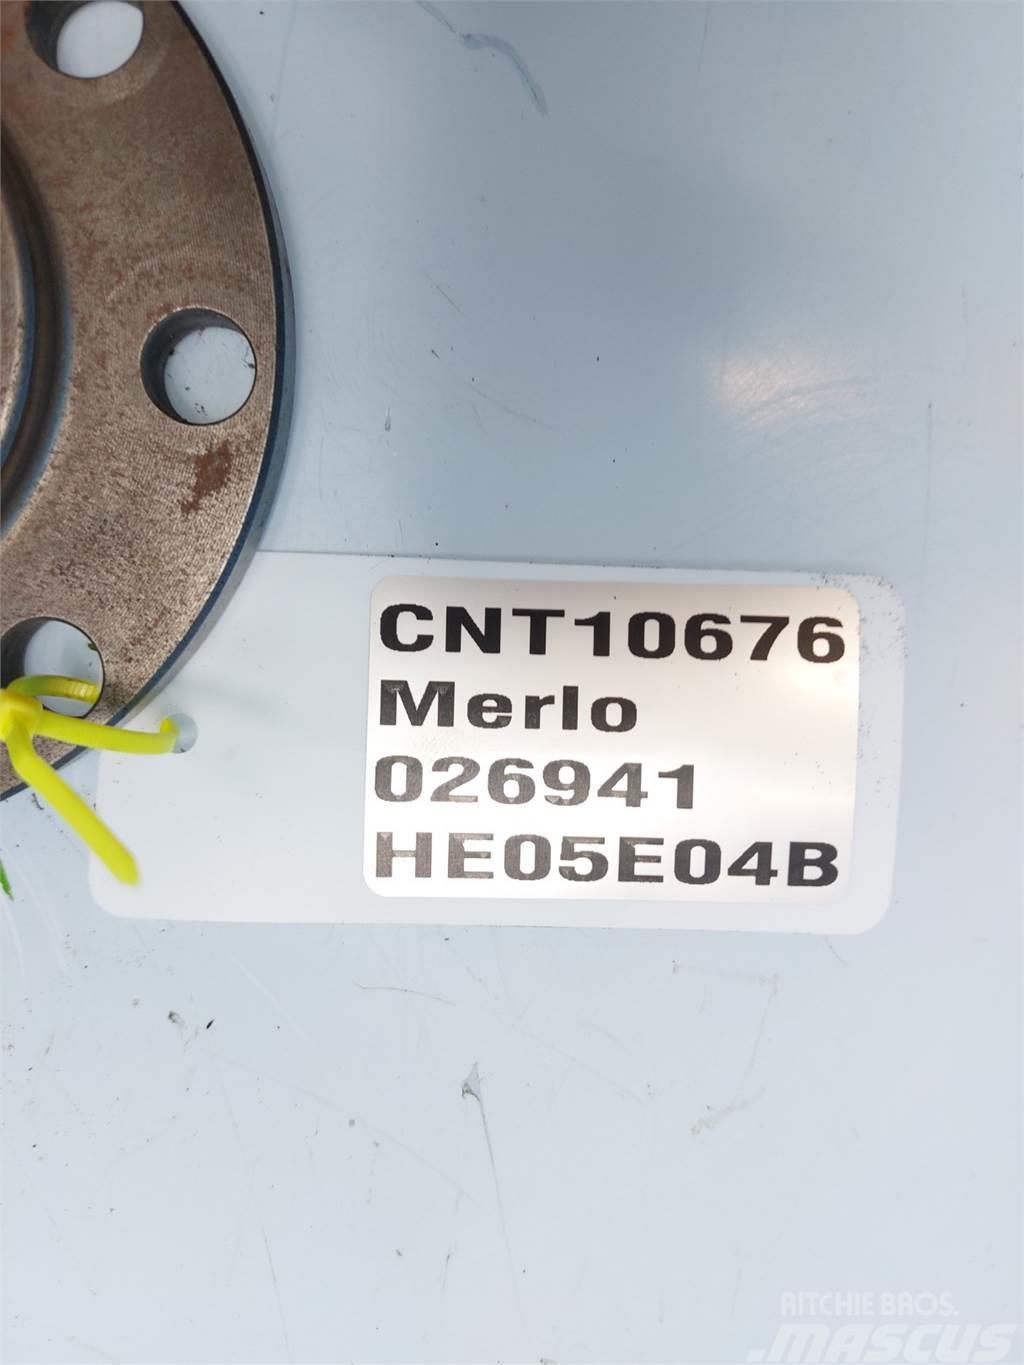 Merlo P41.7 Getriebe